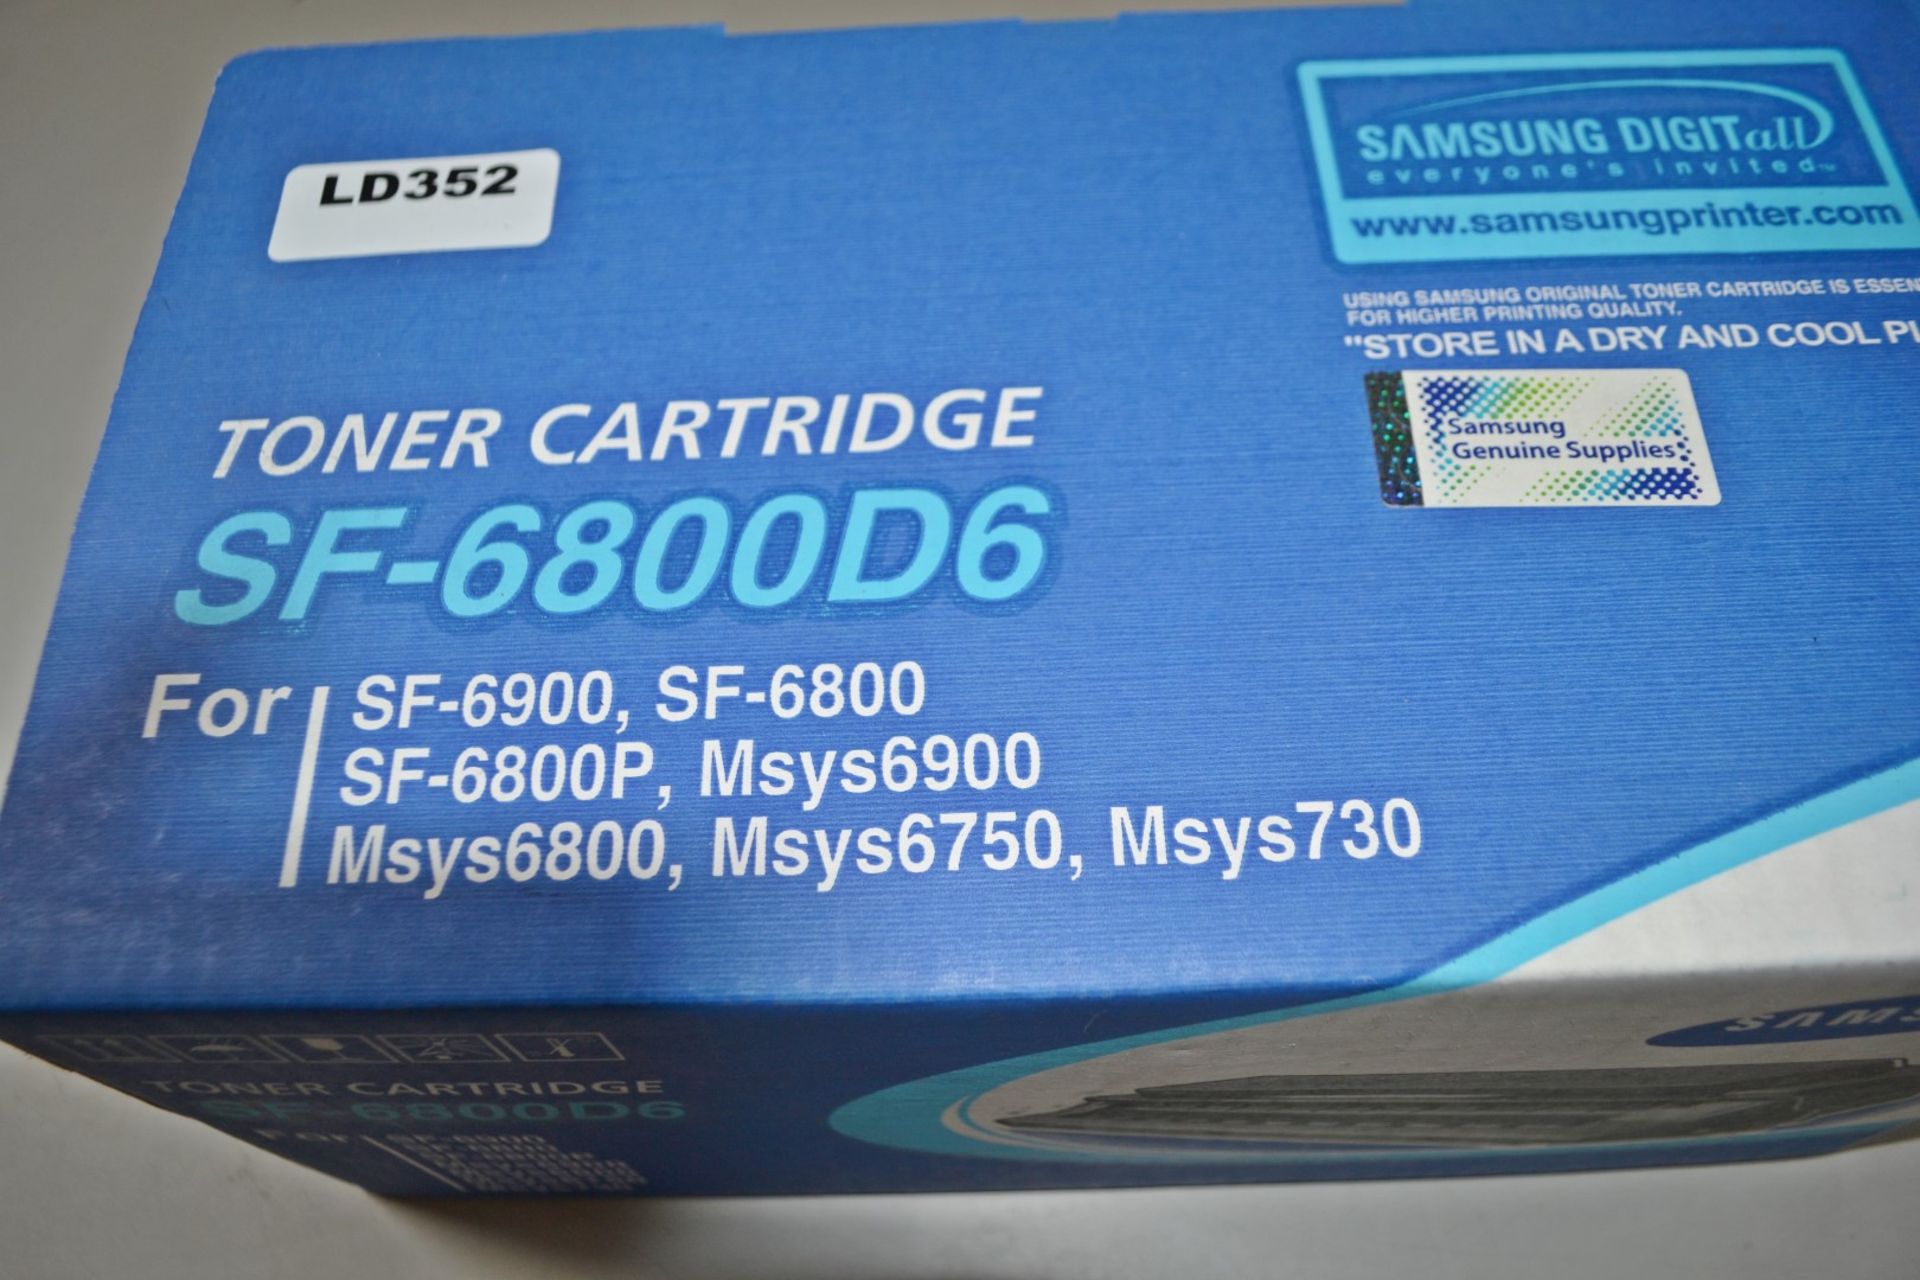 1 x New Samsung Toner Cartridge SF-6800D6 - Ref: LD352 - CL409 - Altrincham WA14 - Image 3 of 4